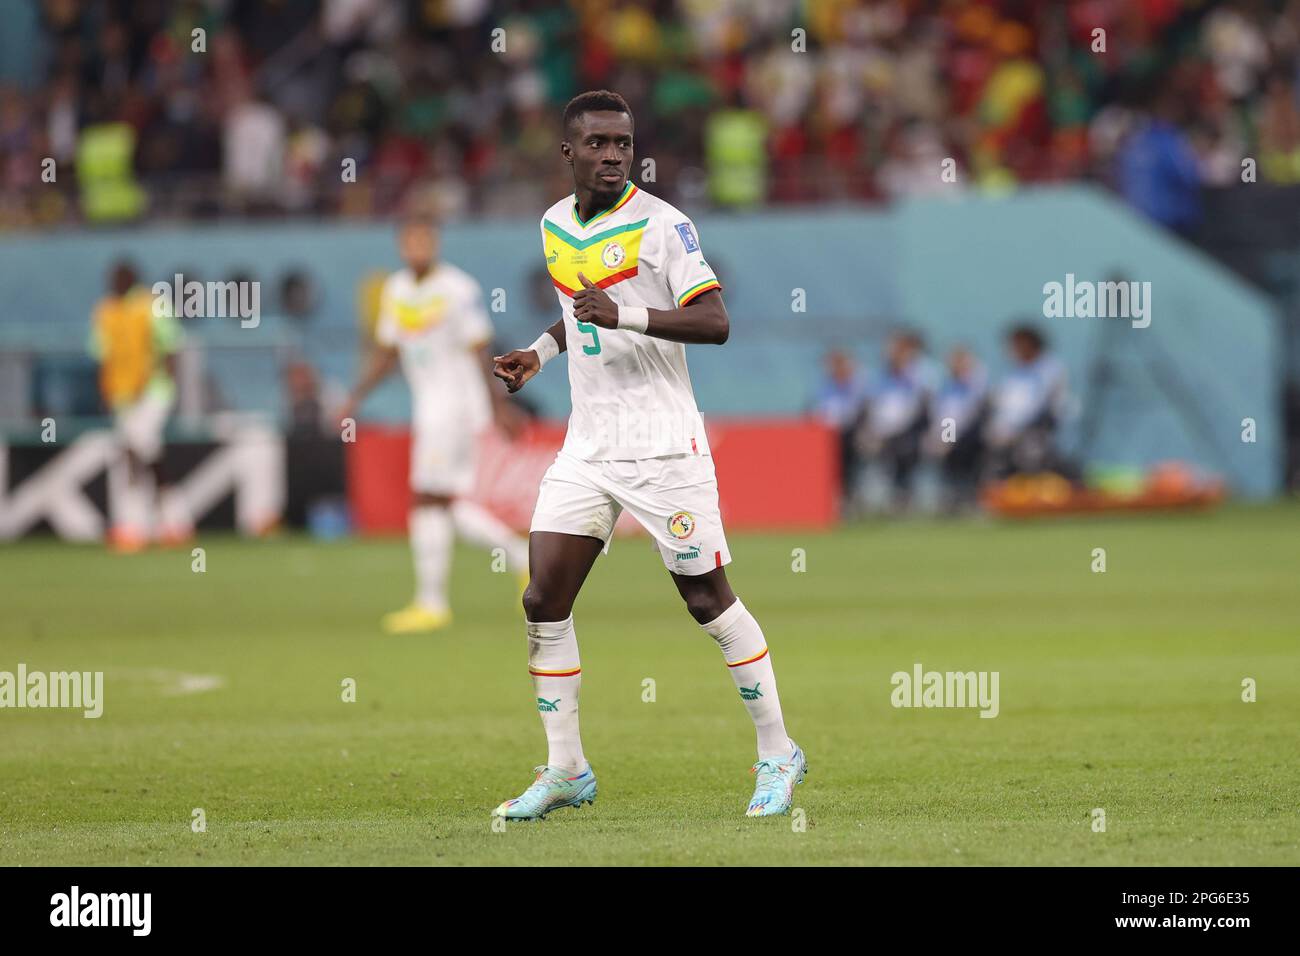 Idrissa Gueye of Senegal seen during the FIFA World Cup Qatar 2022 match between Ecuador and Senegal at Khalifa International Stadium. Final score; Ecuador 1:2 Senegal. Stock Photo